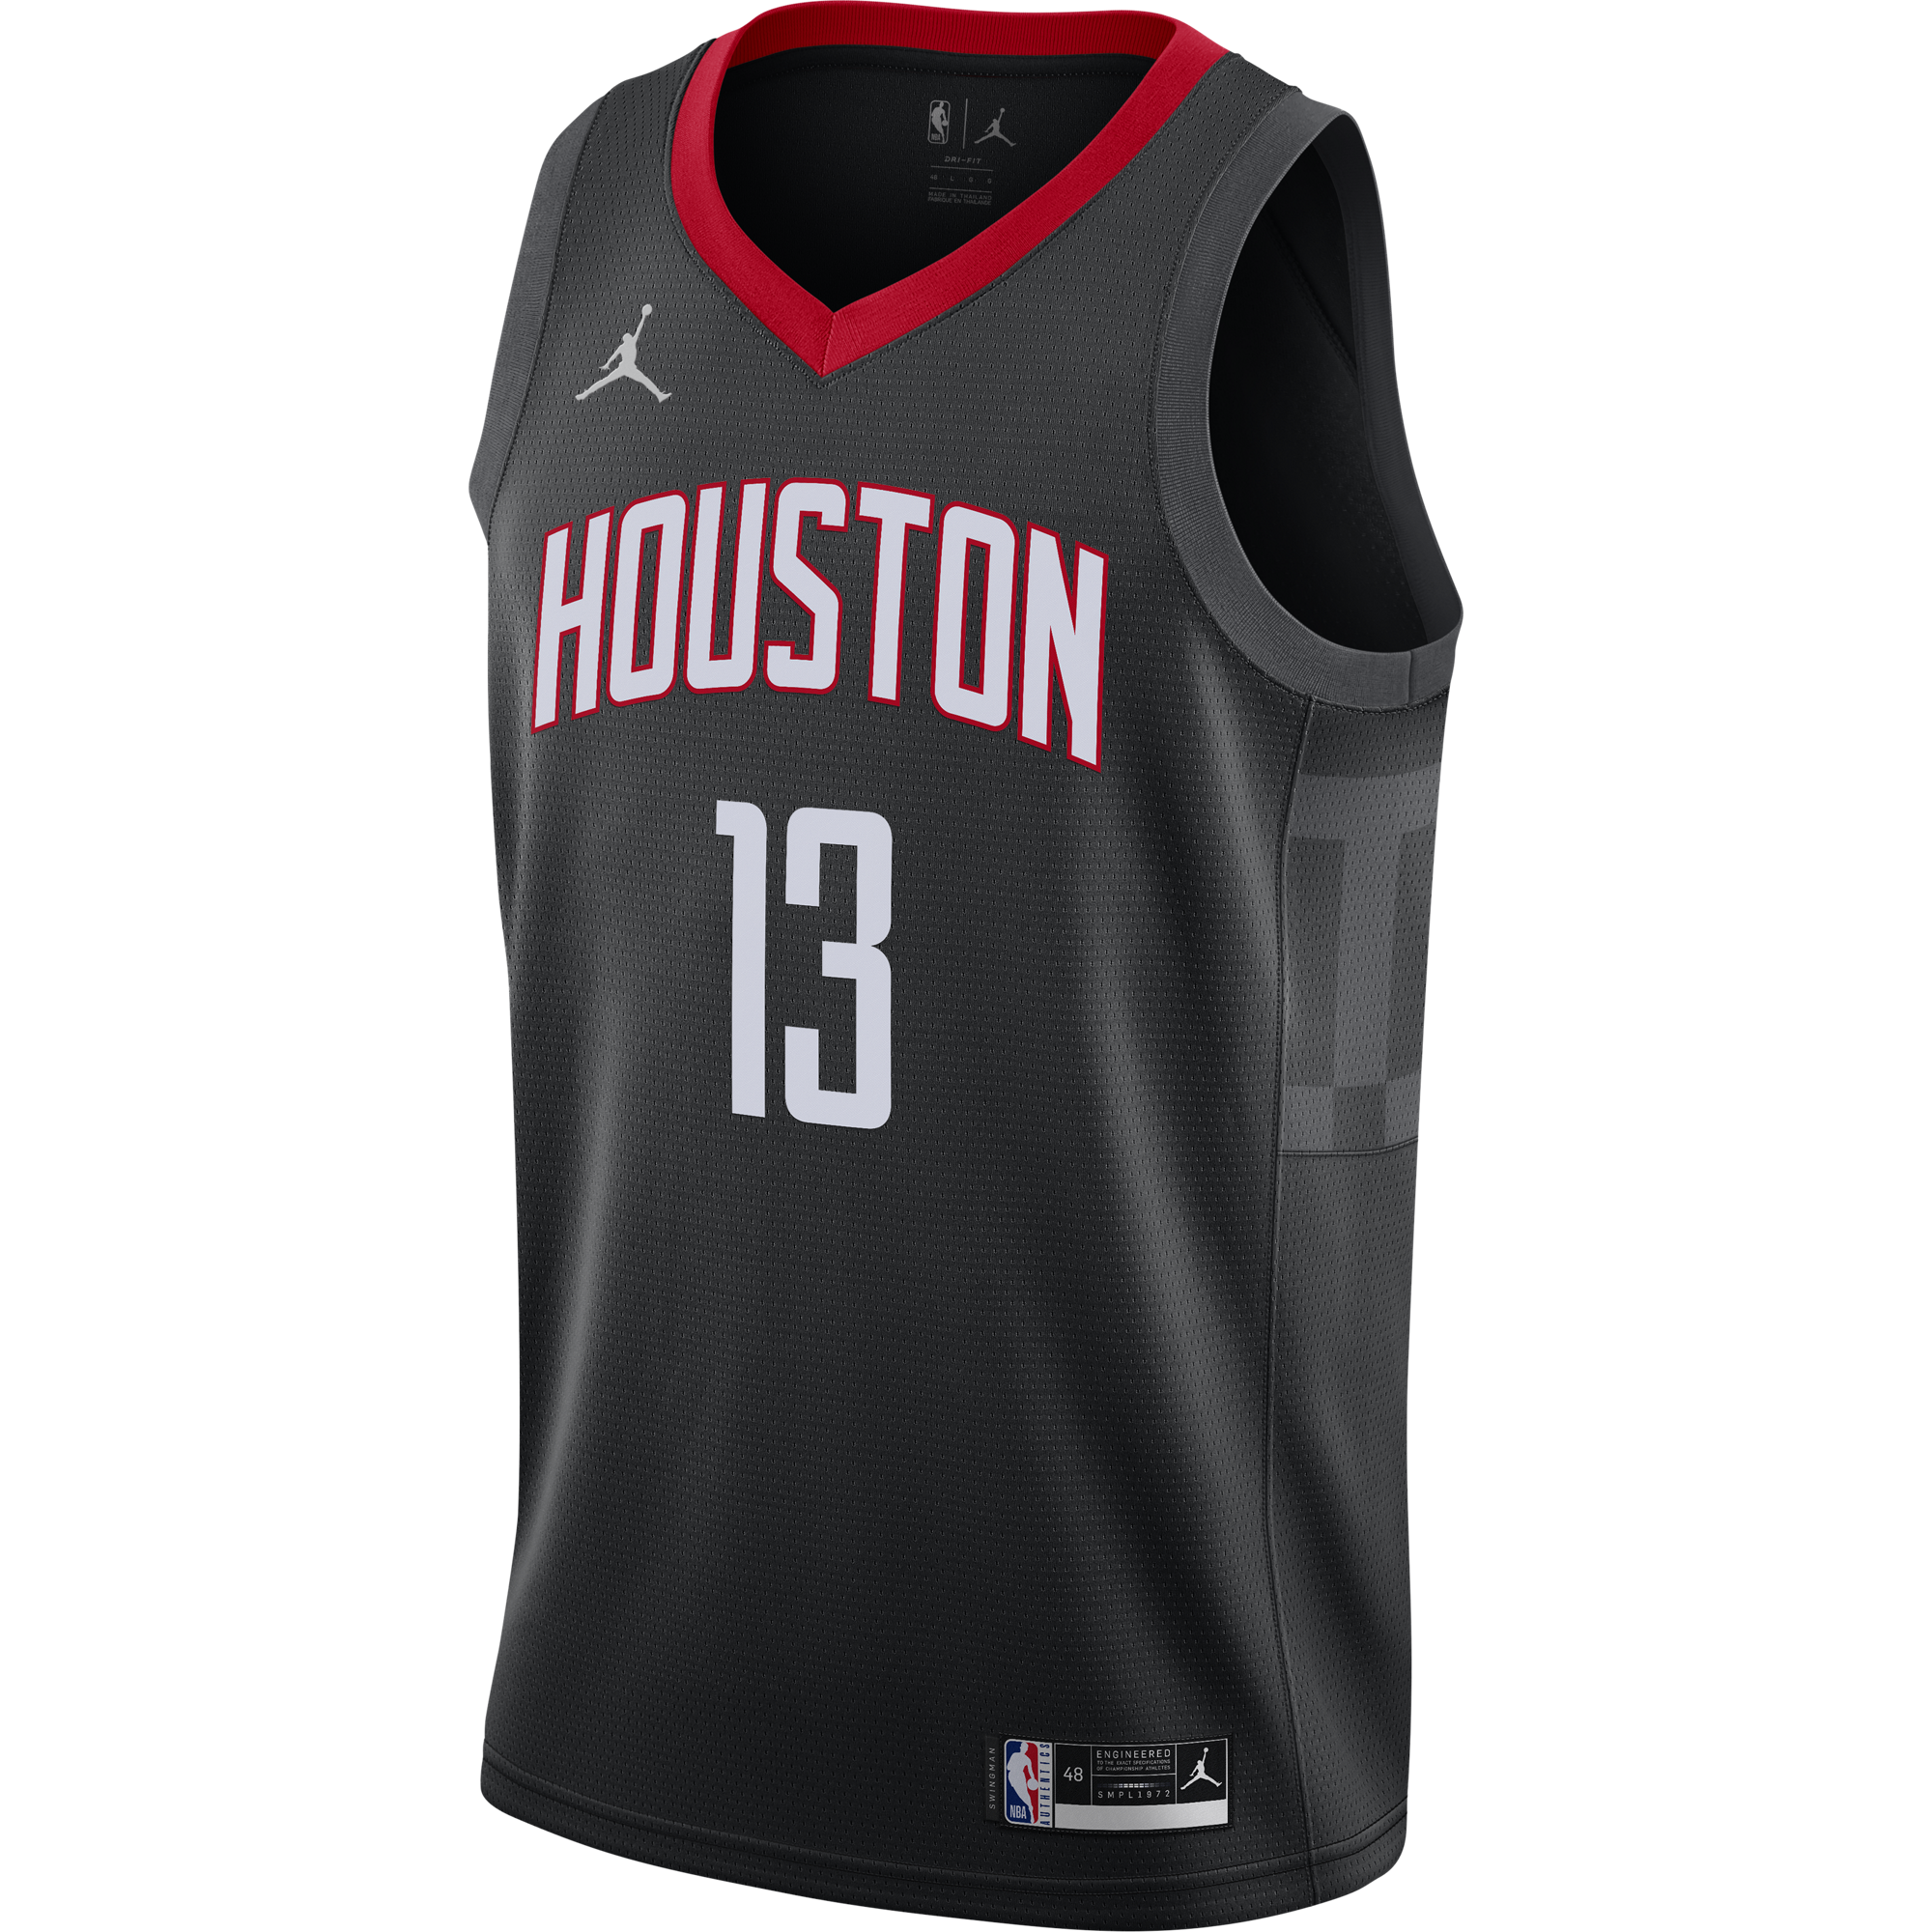 Houston Rockets: Nike Statement jersey vs. Adidas black jersey